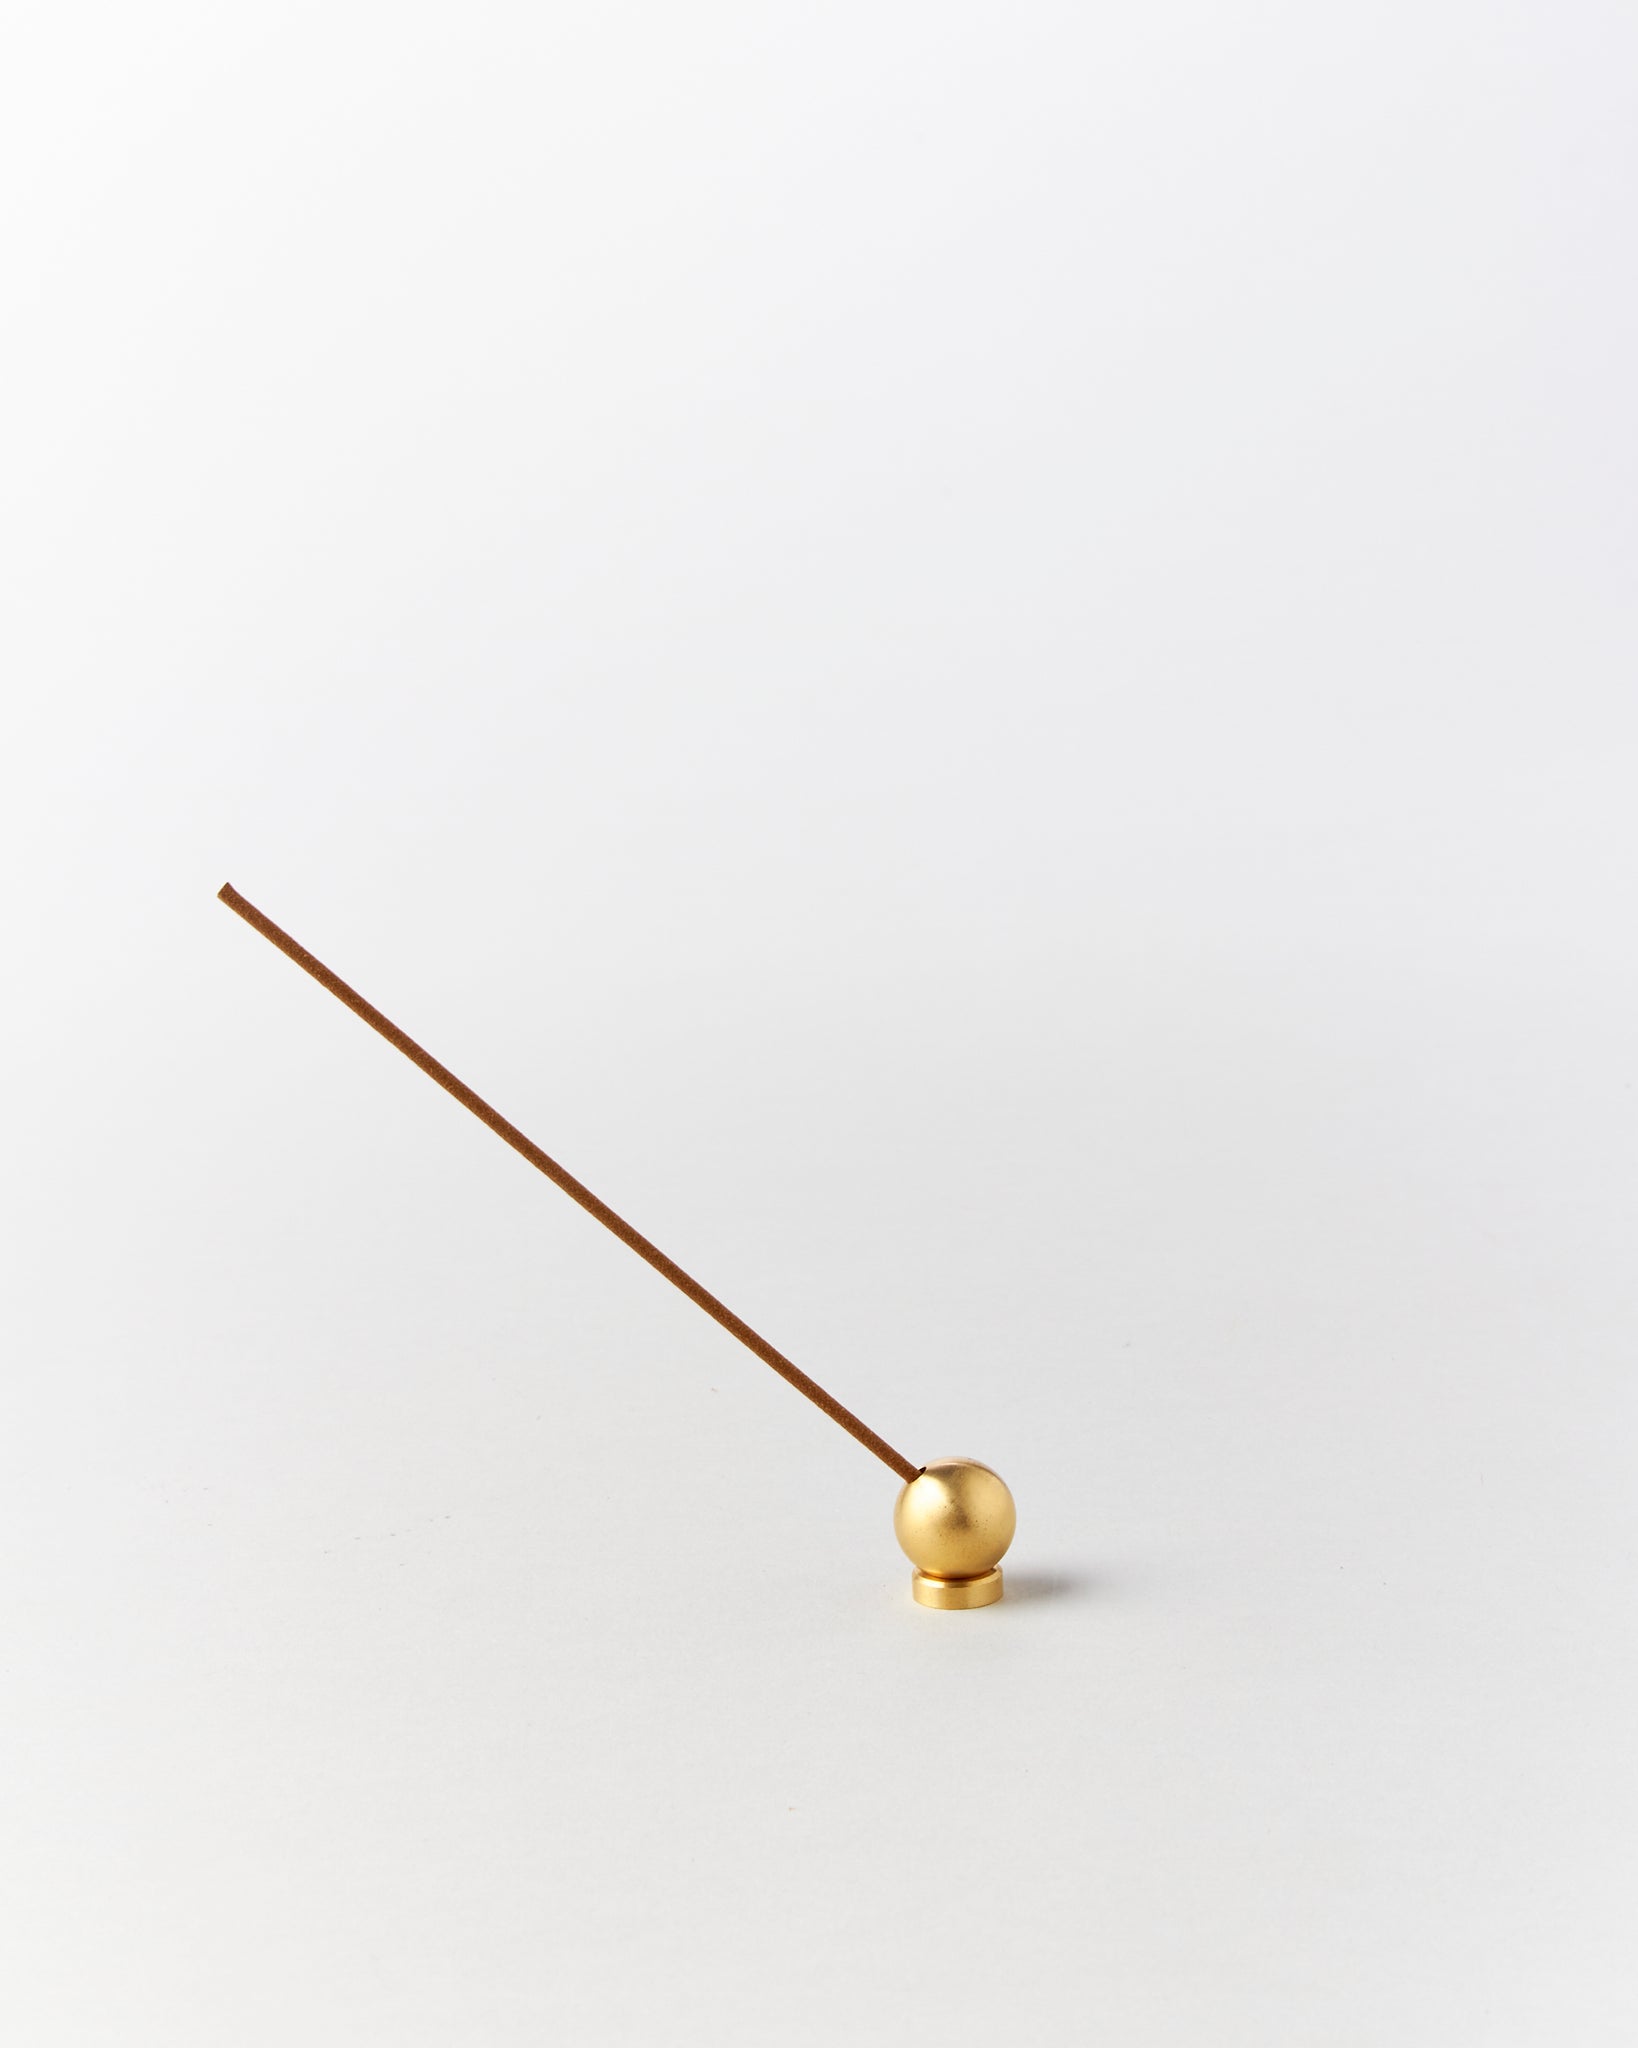 Brass Ball Incense Holder